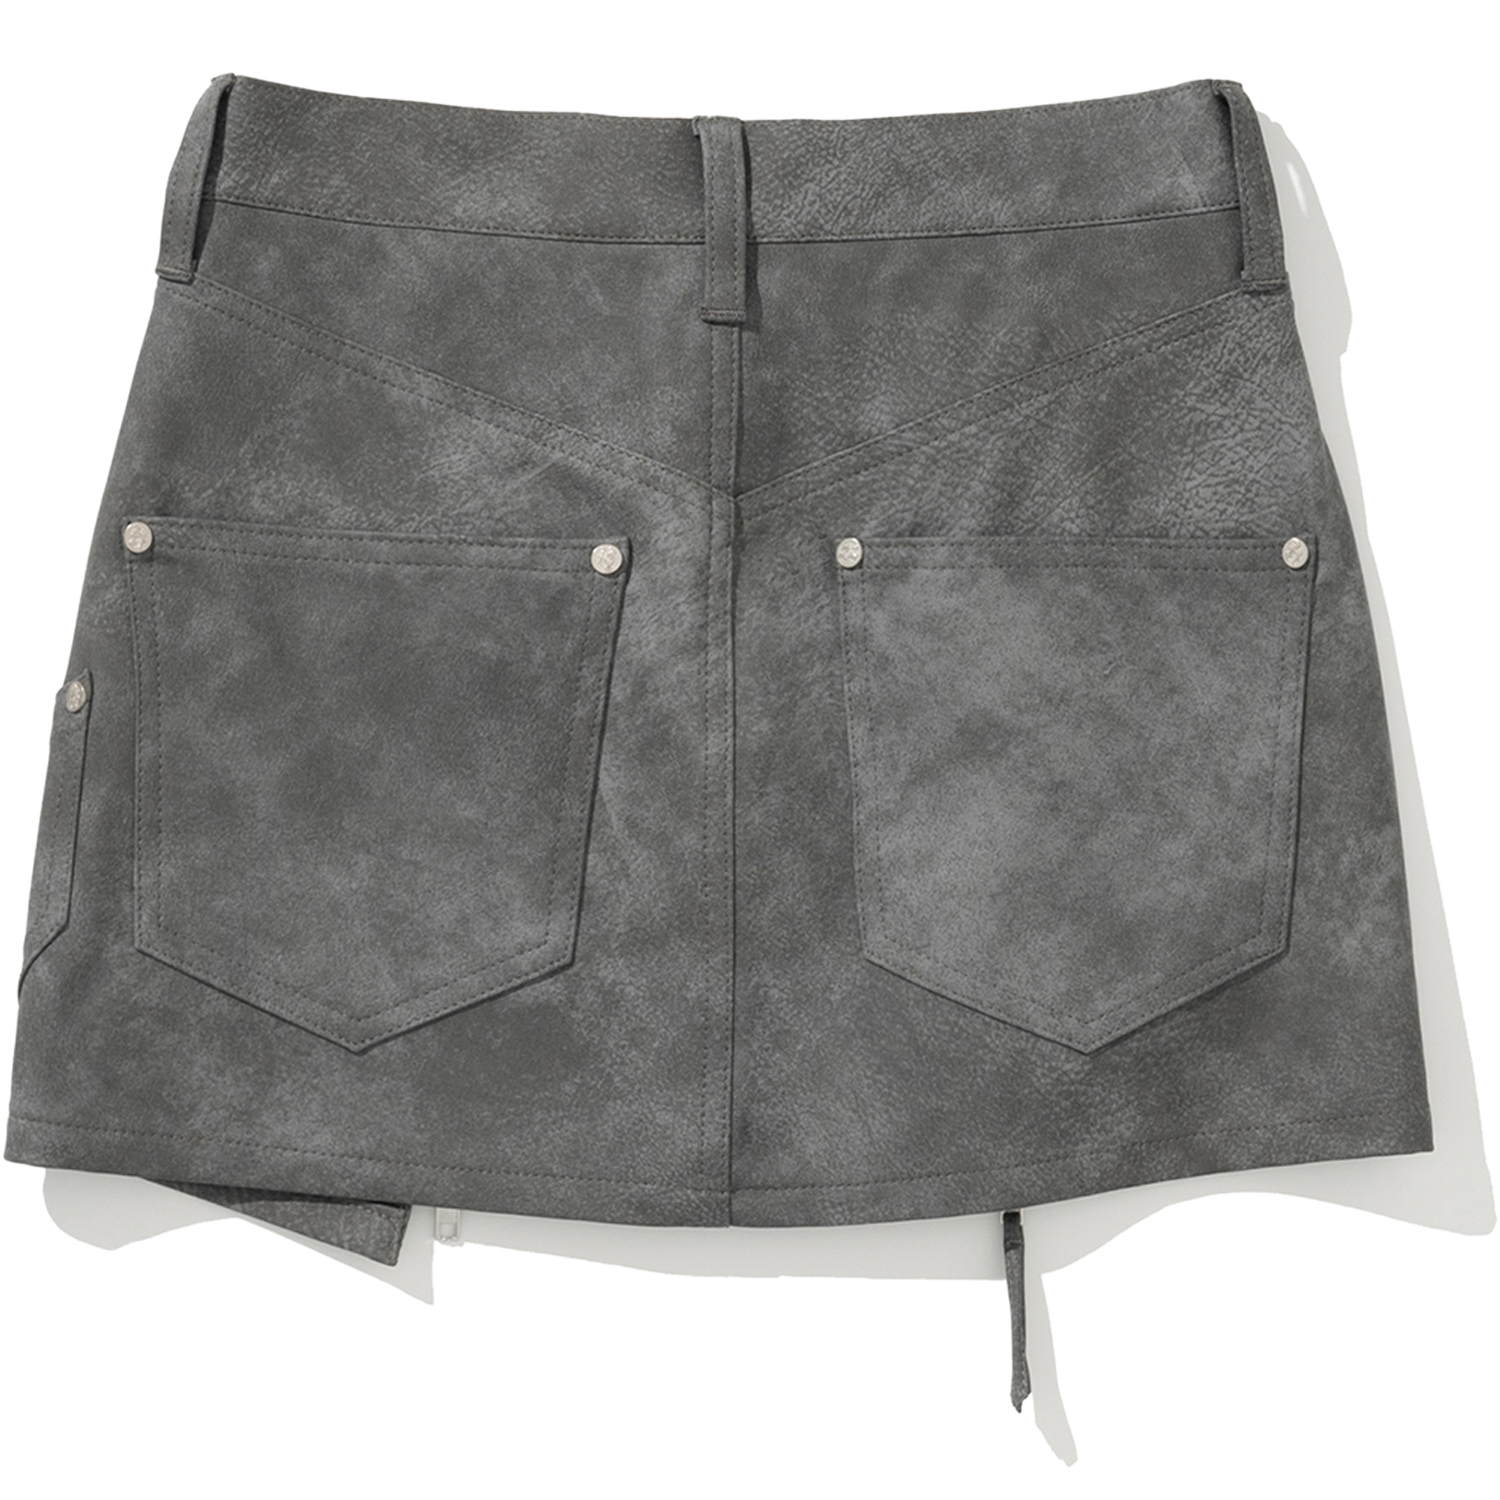 W Vintage Leather Zipper Mini Skirt - Charcoal,NOT4NERD